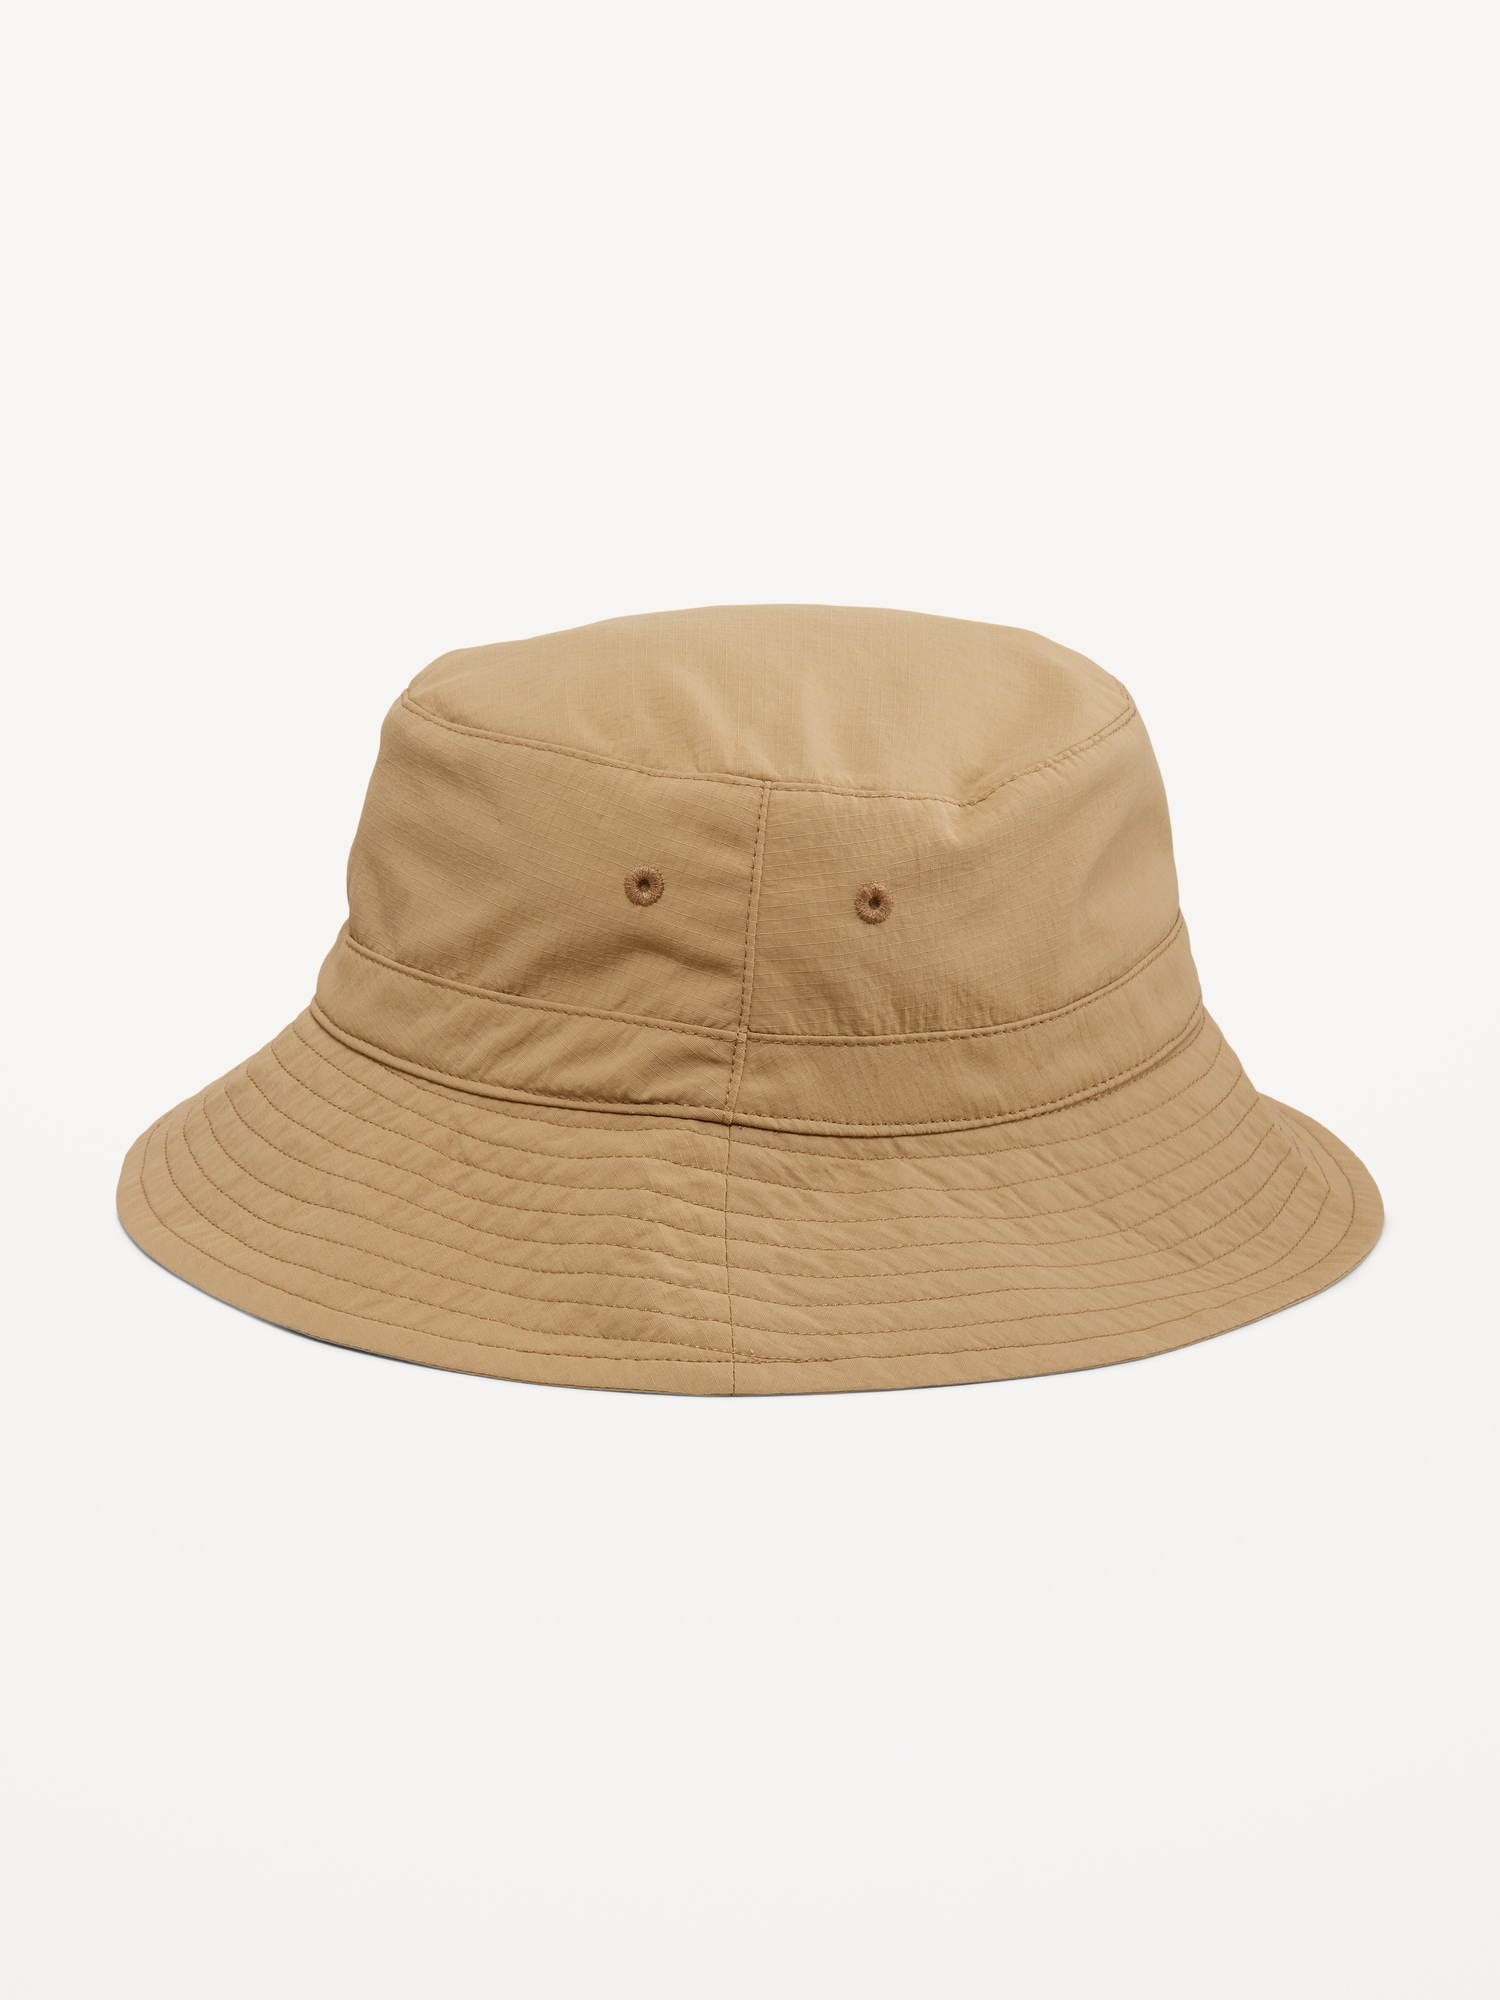 Old Navy Nylon Bucket Hat for Men brown. 1